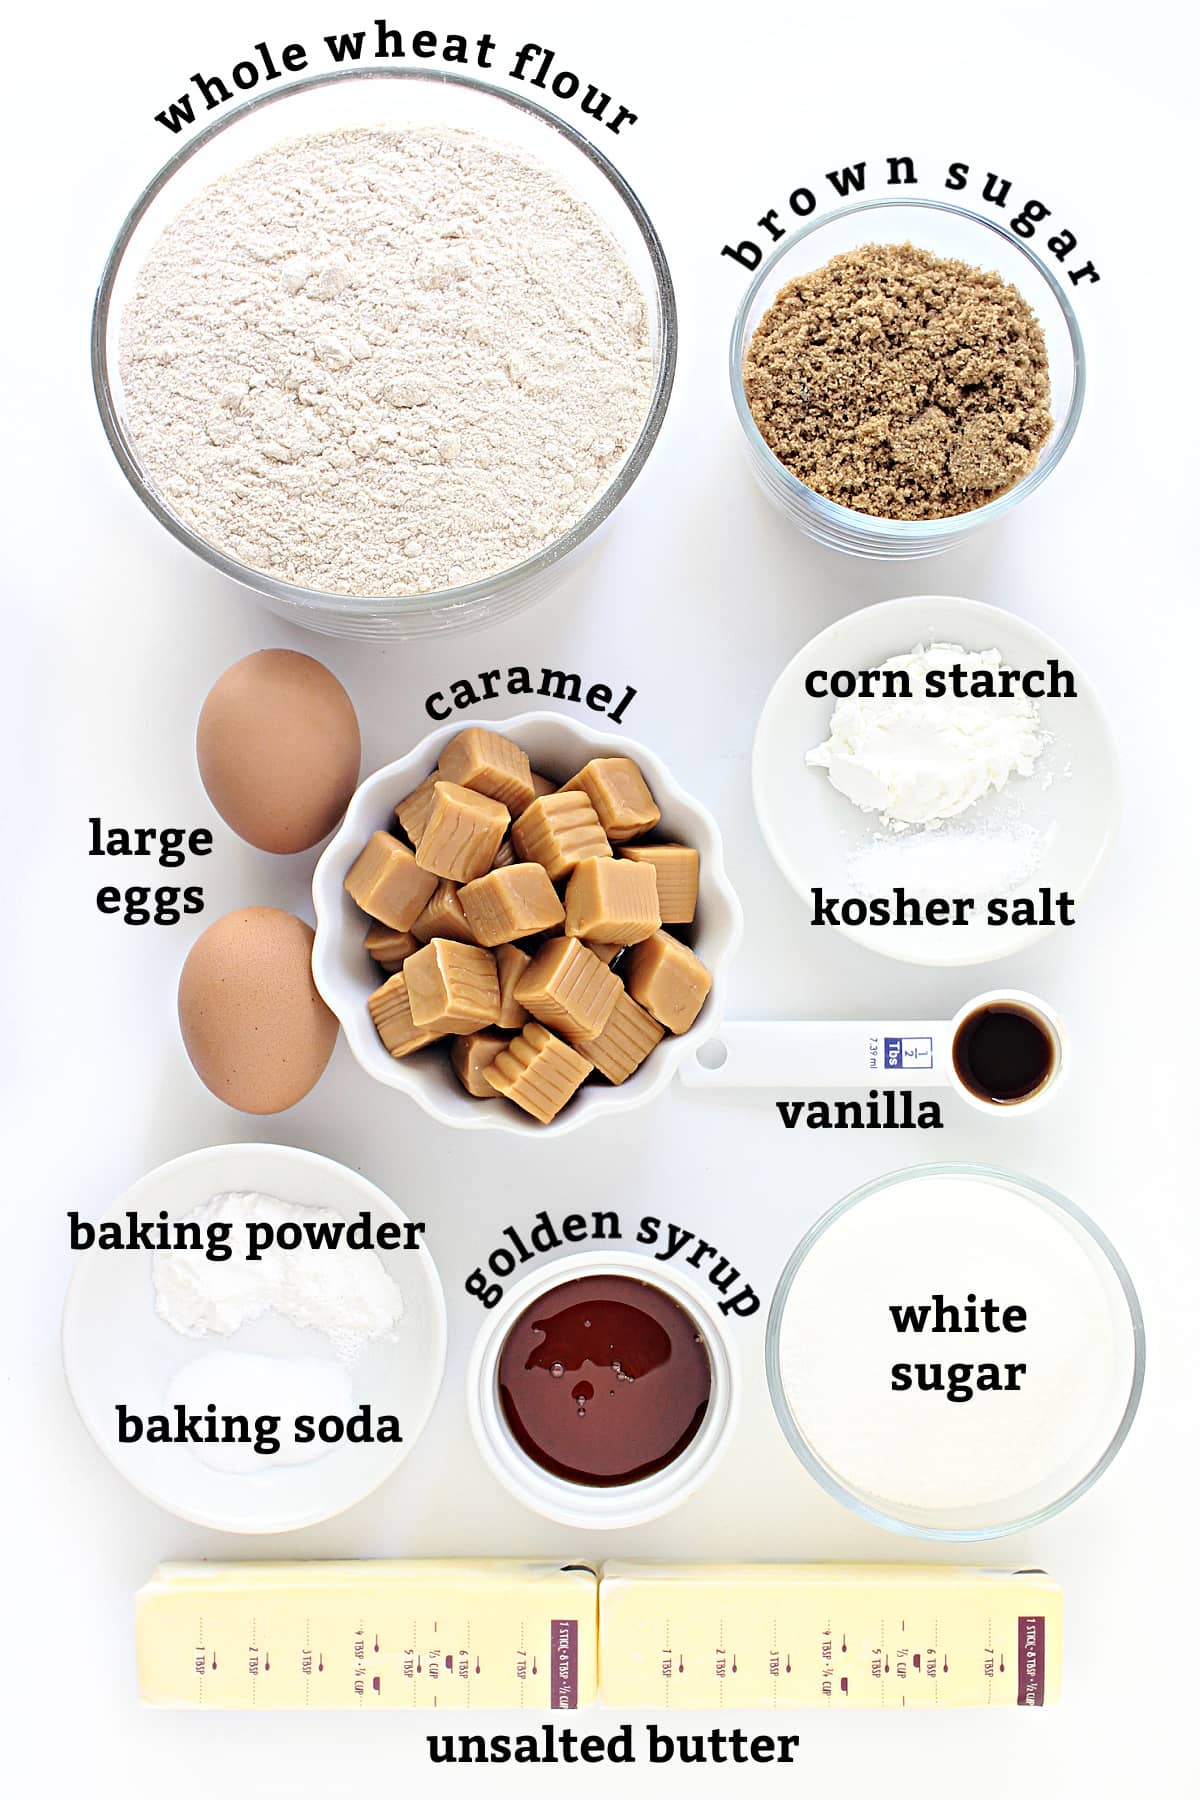 Ingredients labeled; flour, brown/white sugar, eggs, caramels, starch, salt, vanilla, baking powder/soda, syrup, butter.